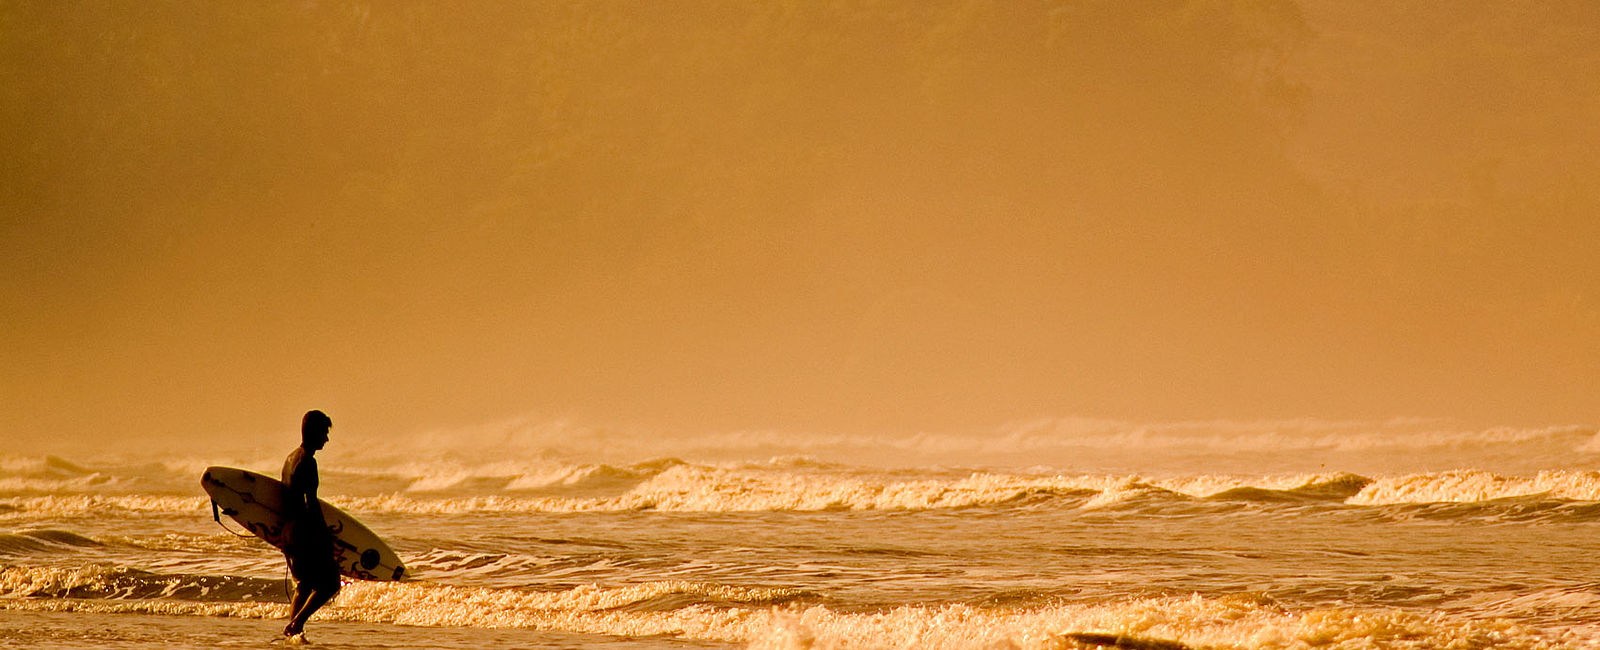 SURFER'S PARADISE - COSTA RICA
 Guancaste - Wo Costa Rica Wellen schlägt 